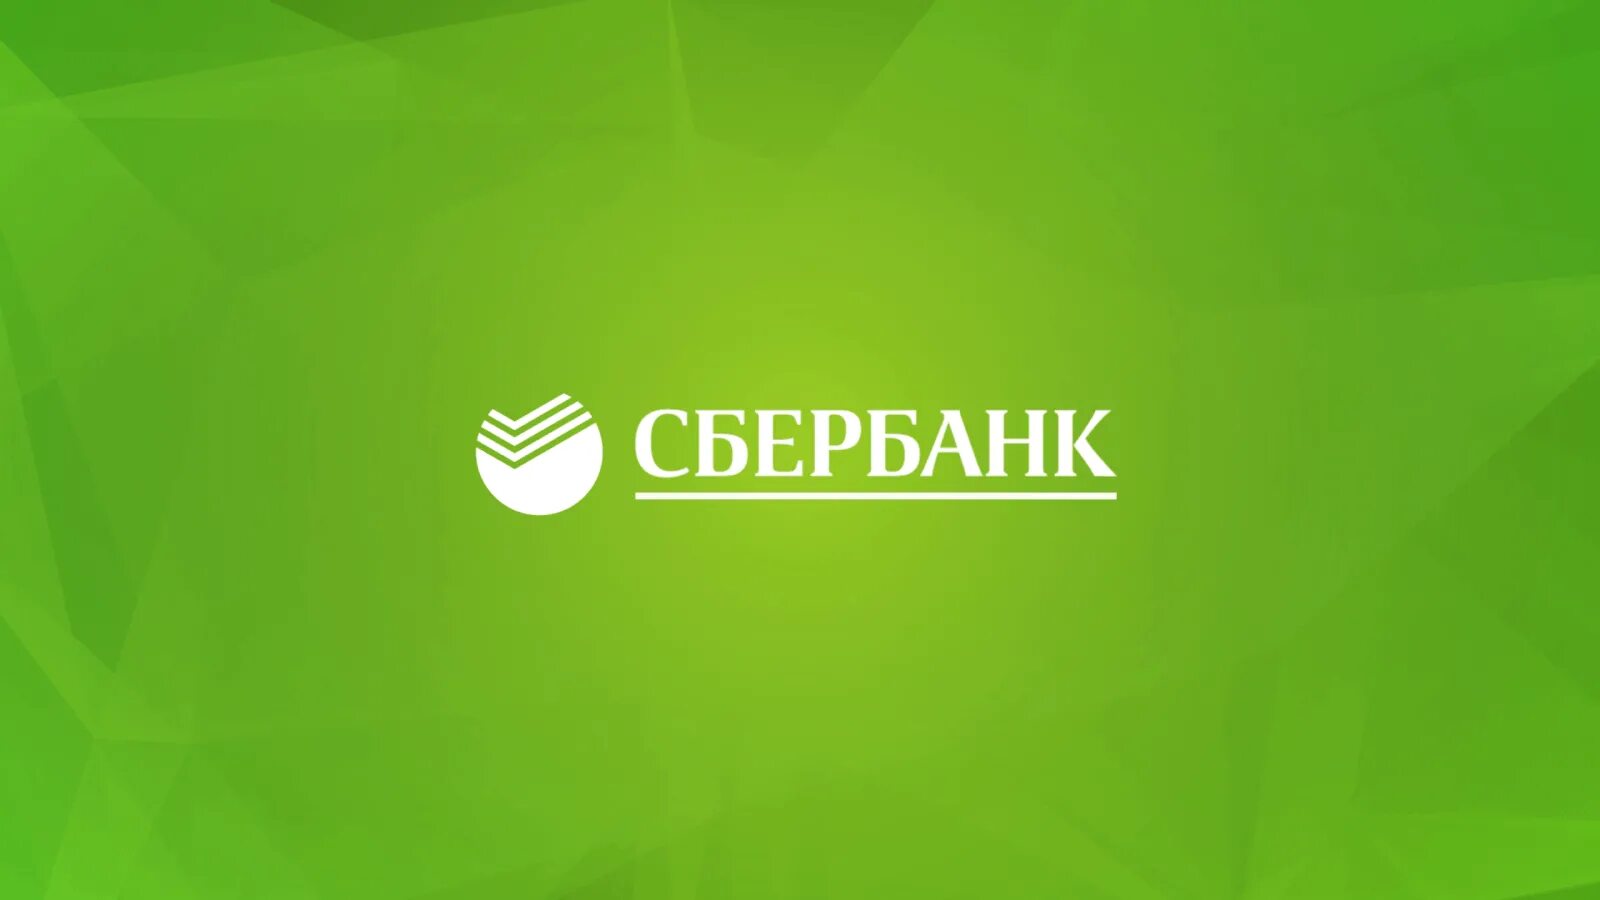 Сбербанк фон. Сбербанк логотип. Сбербанк картинки. Сбербанк логотип на зеленом фоне.